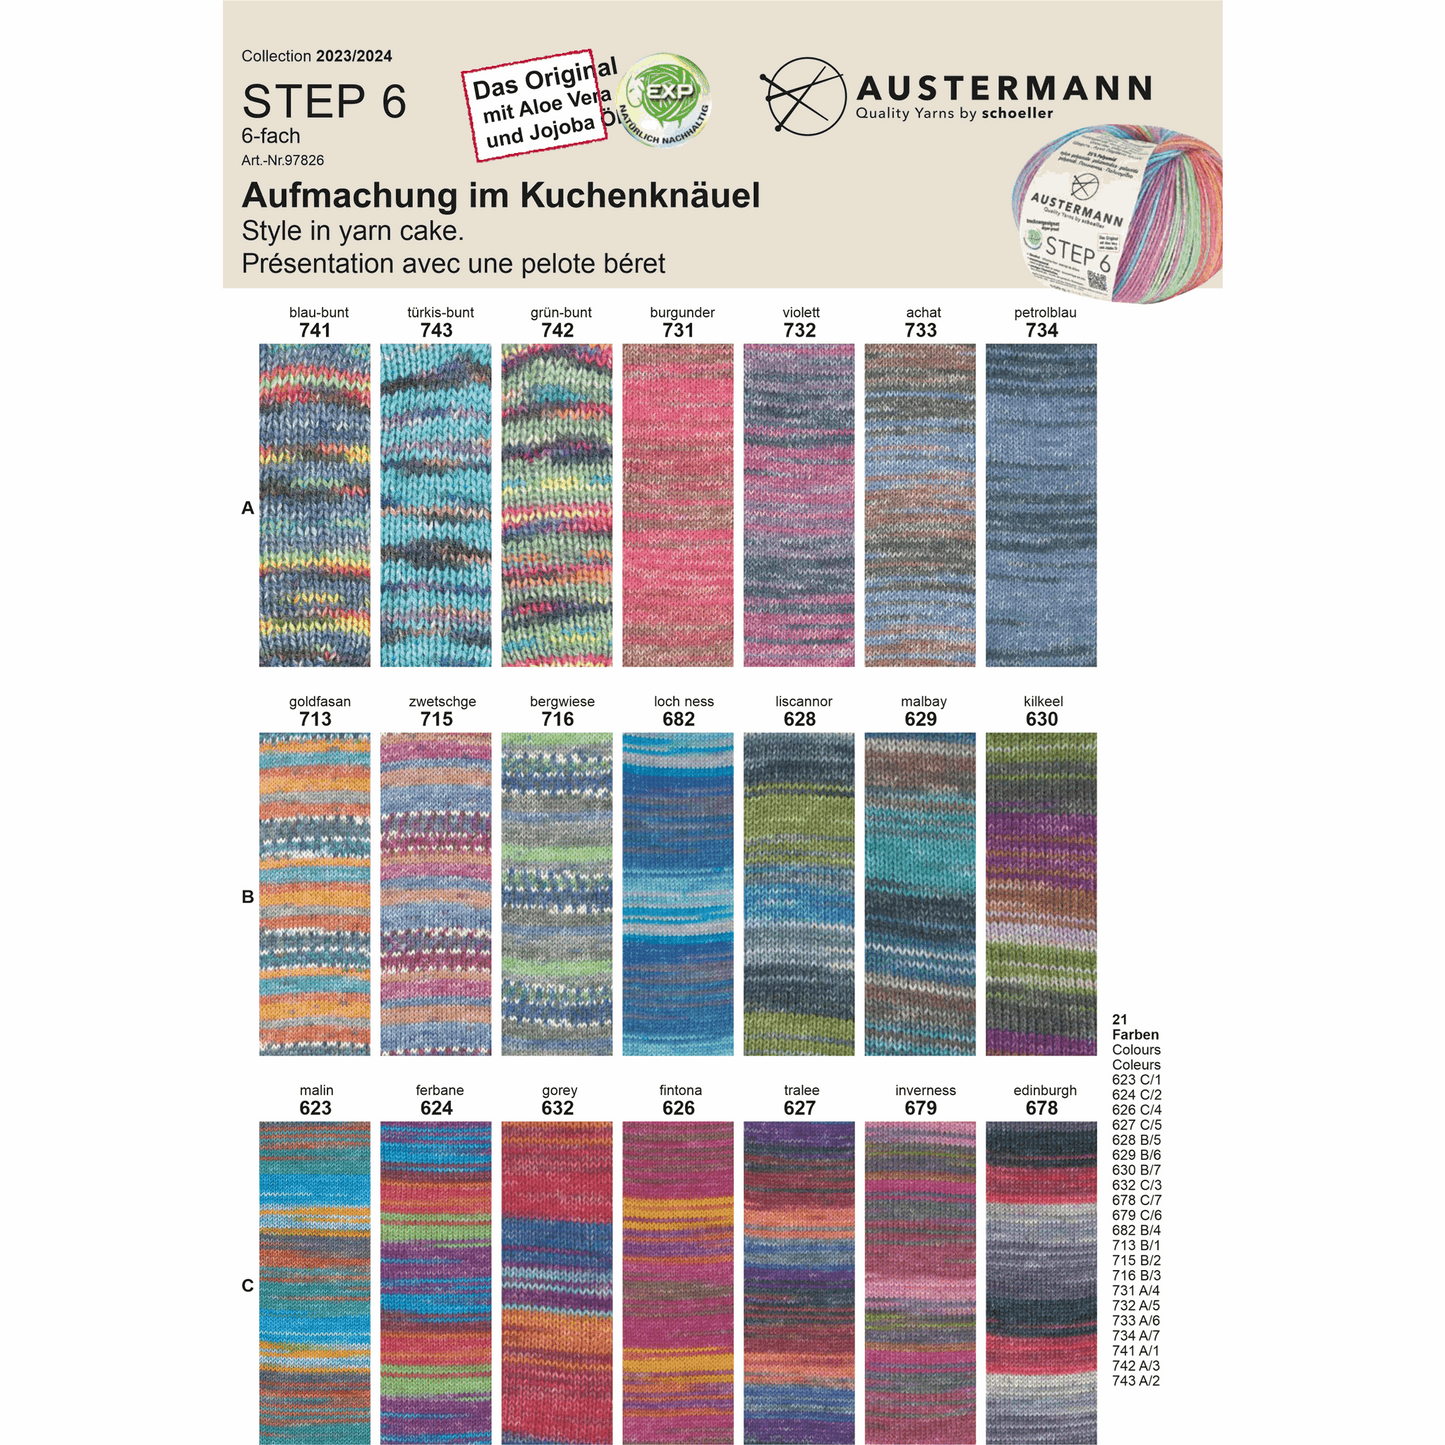 Schoeller-Austermann Step6, Irish Rainbow, 150g, 97826, color gorey 632